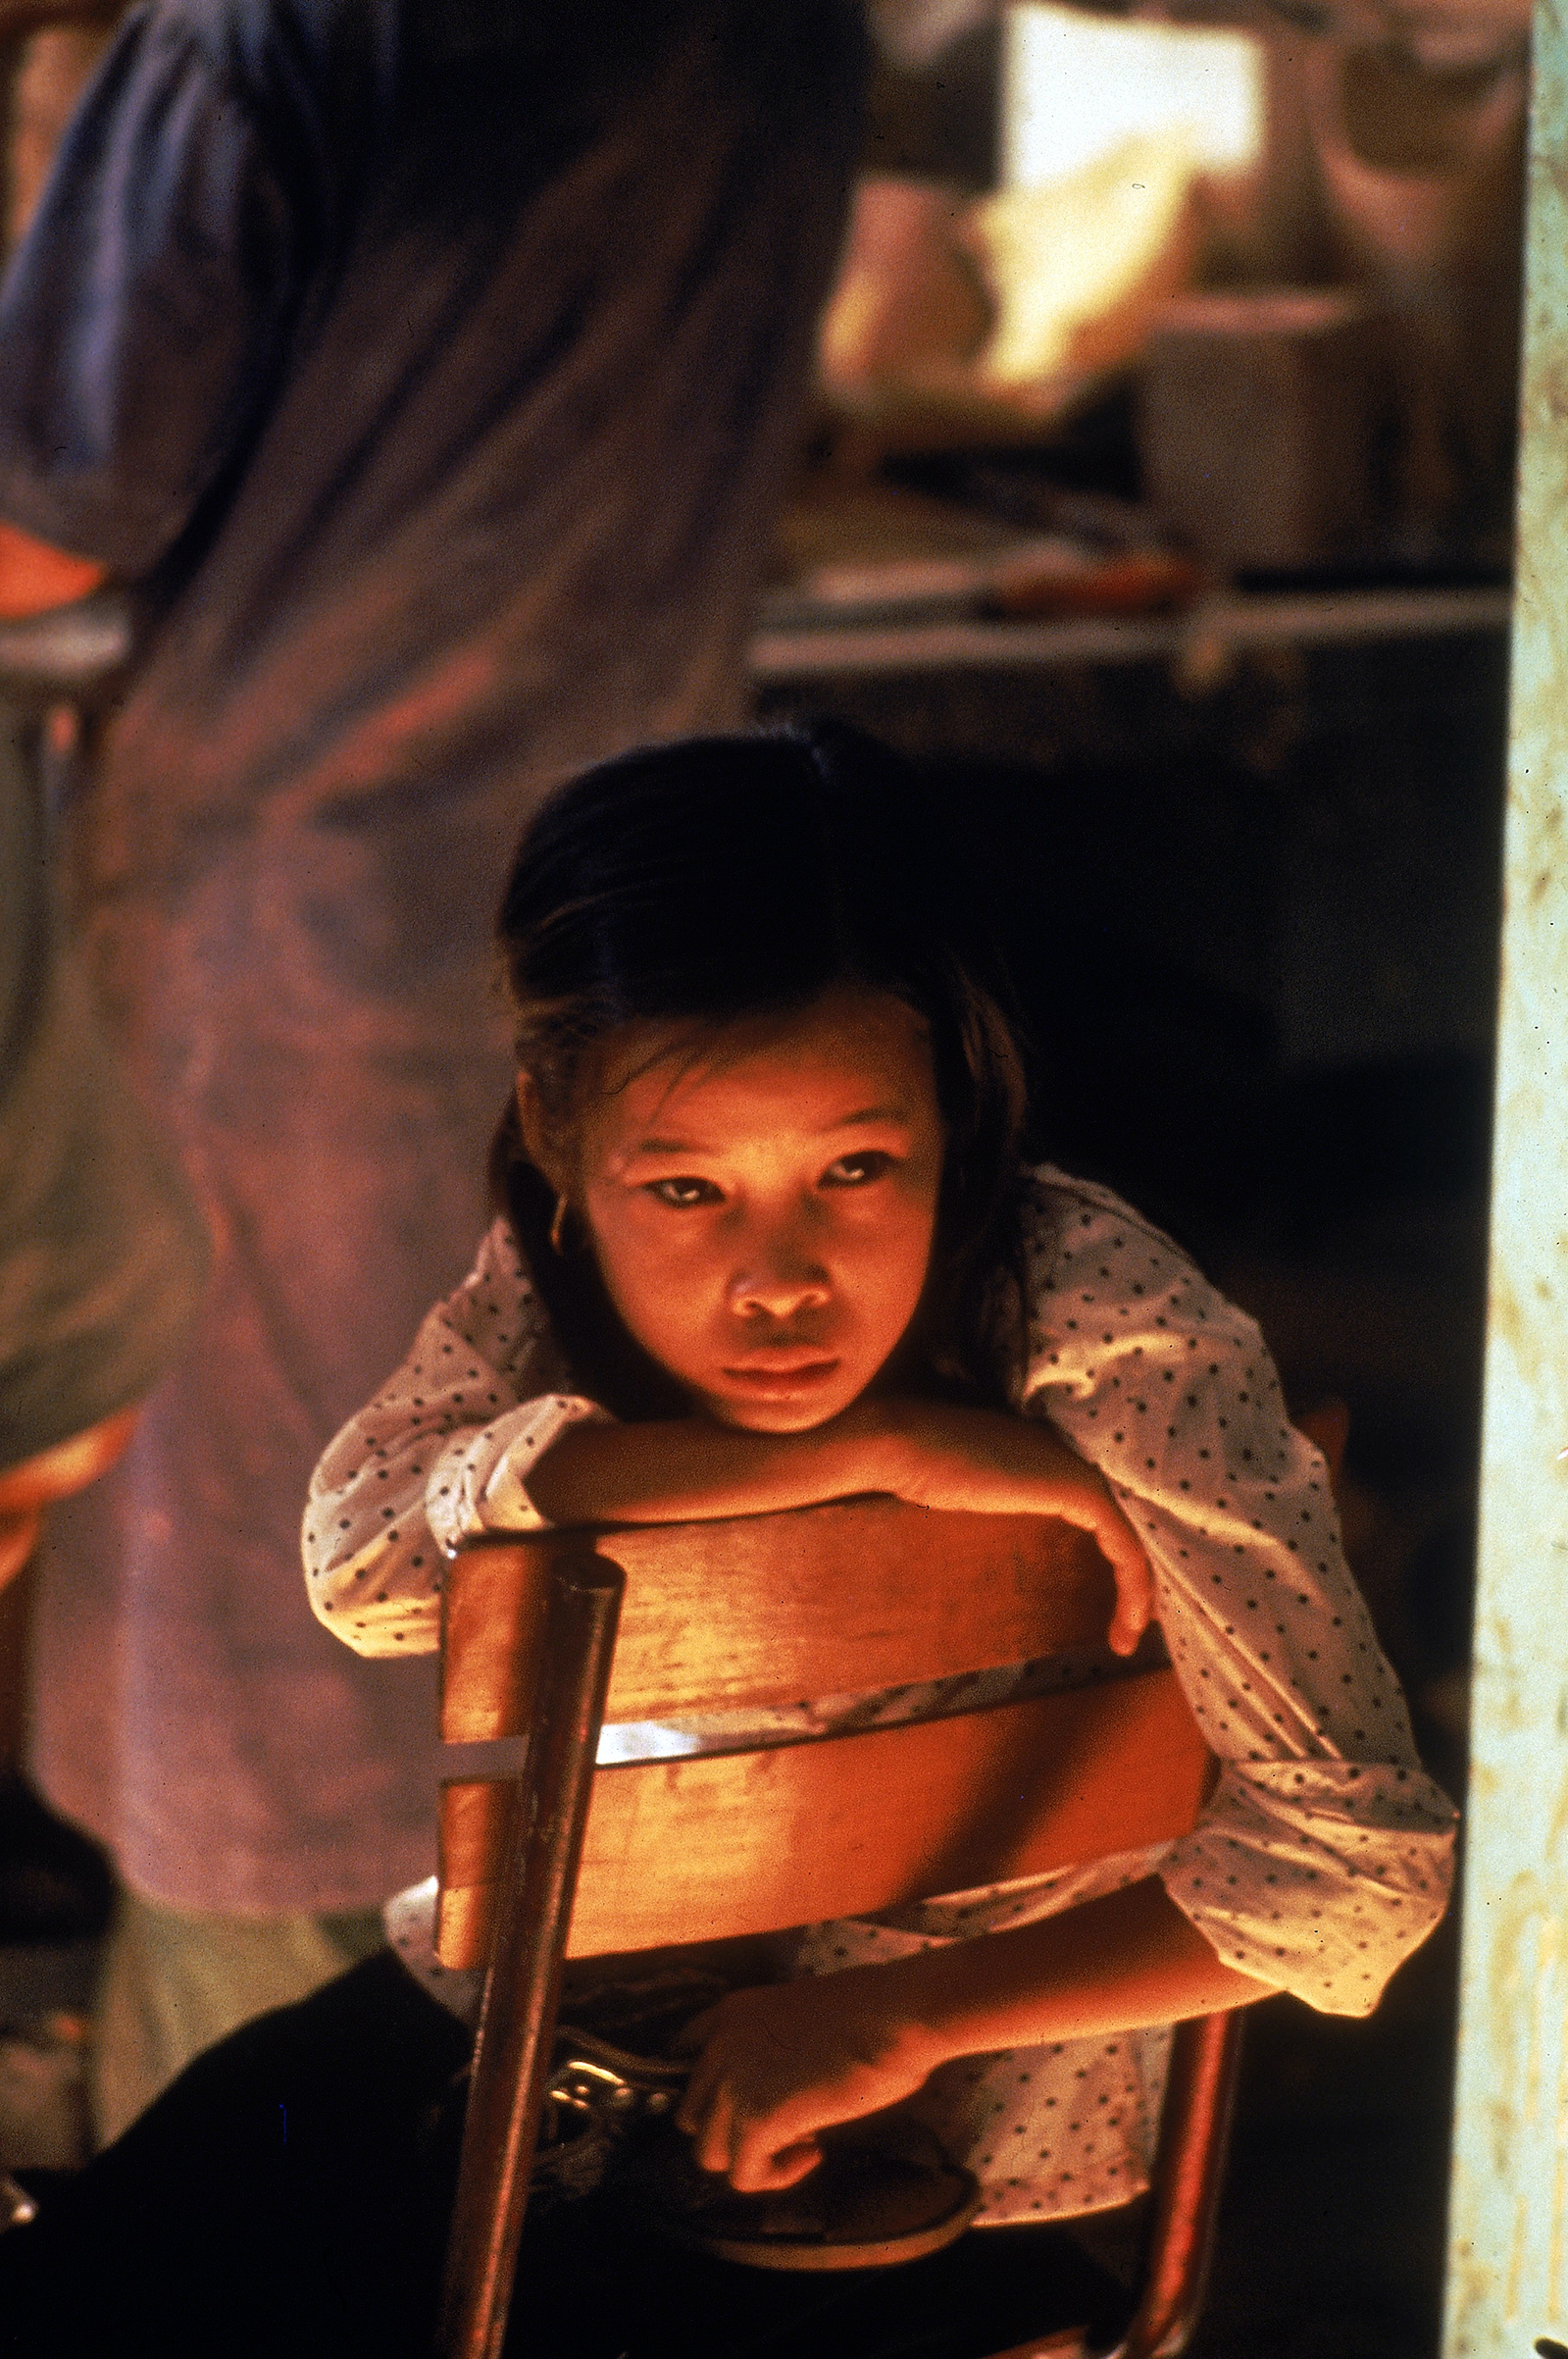 Vietnam war 1968 Larry Burrows photo essay "This Girl Tron."